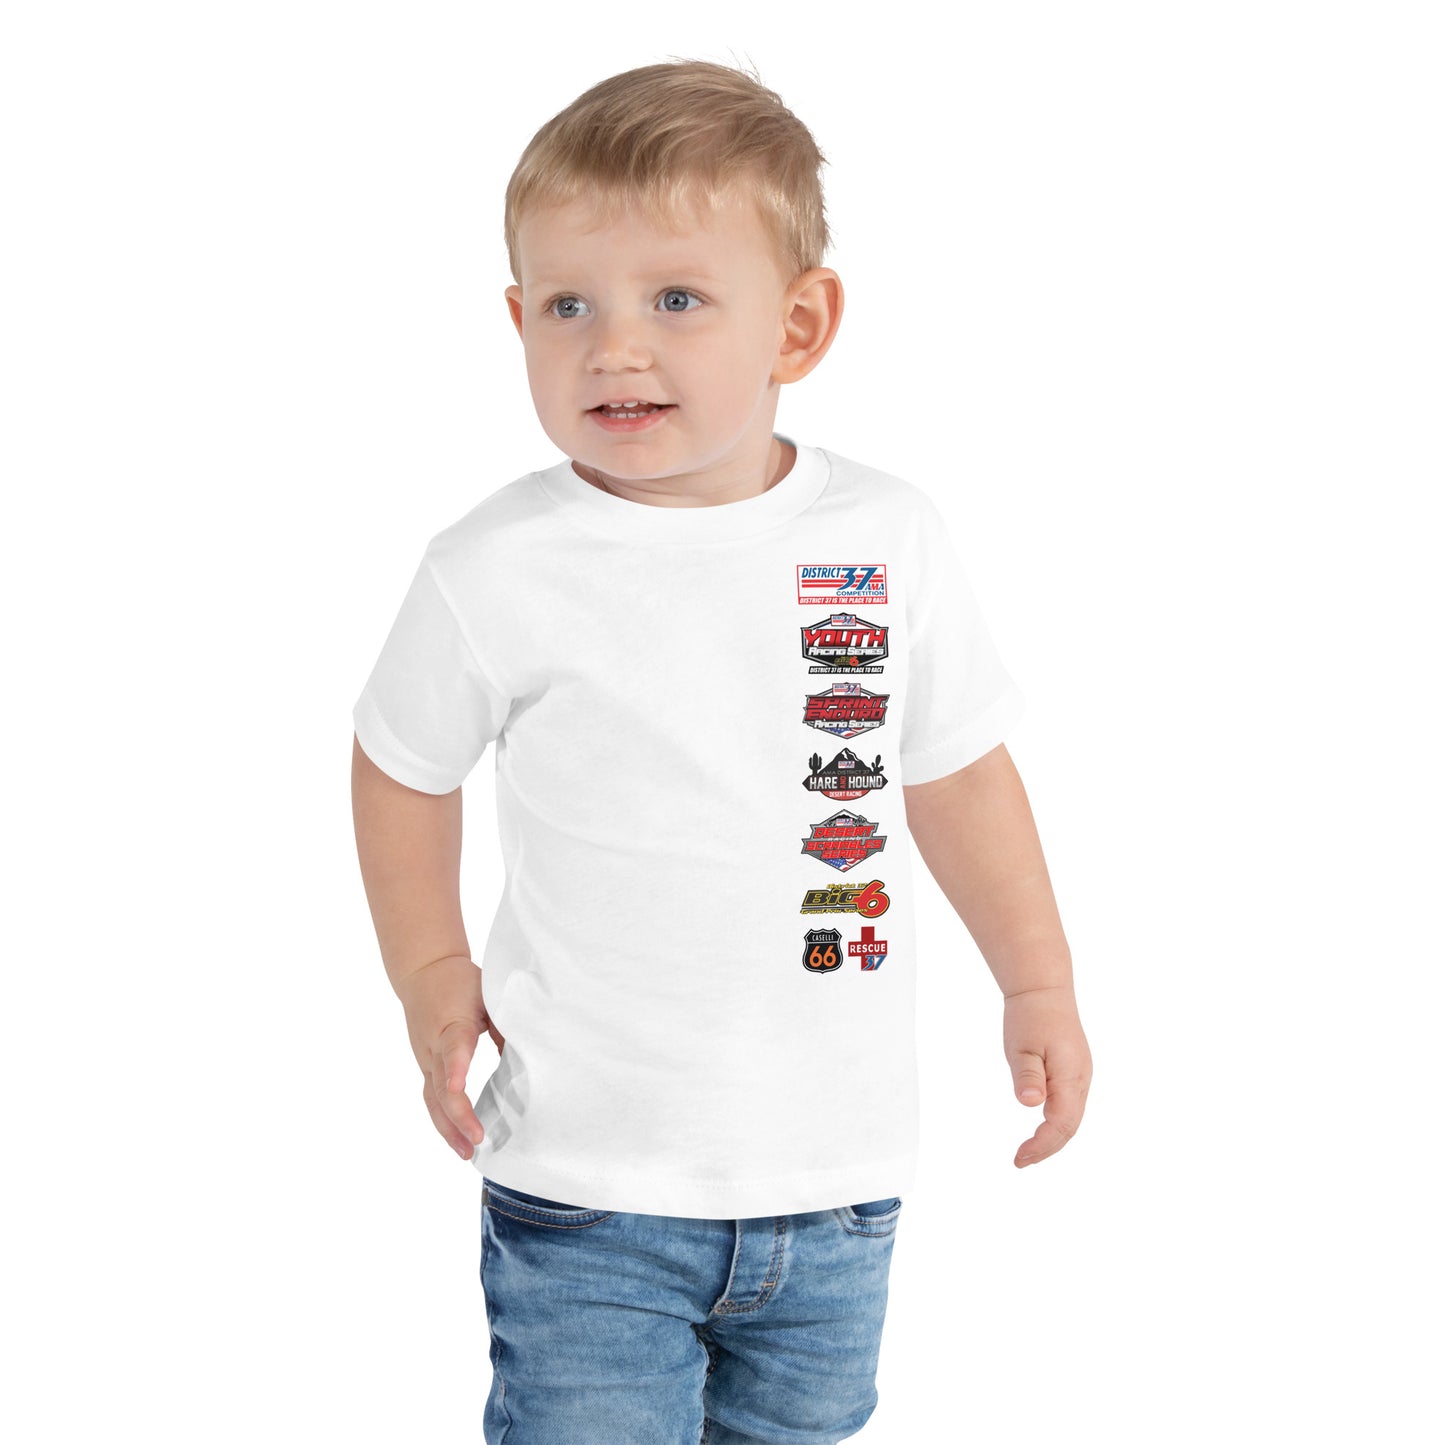 Toddler District 37 Series Shirt - Toddler D37 Shirt